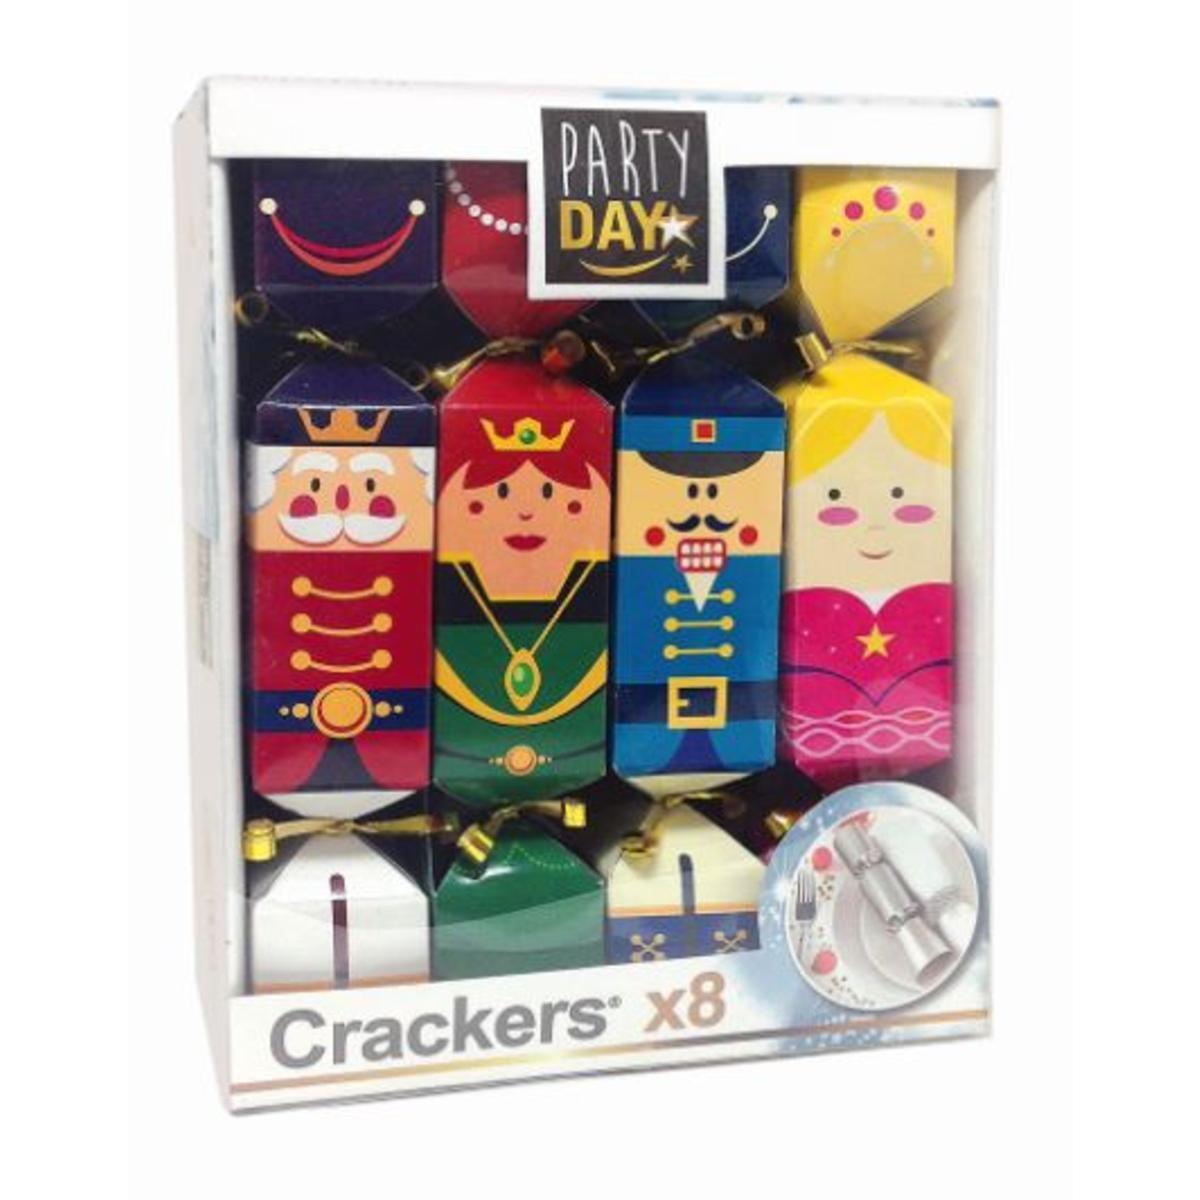 8 crackers nutcracker